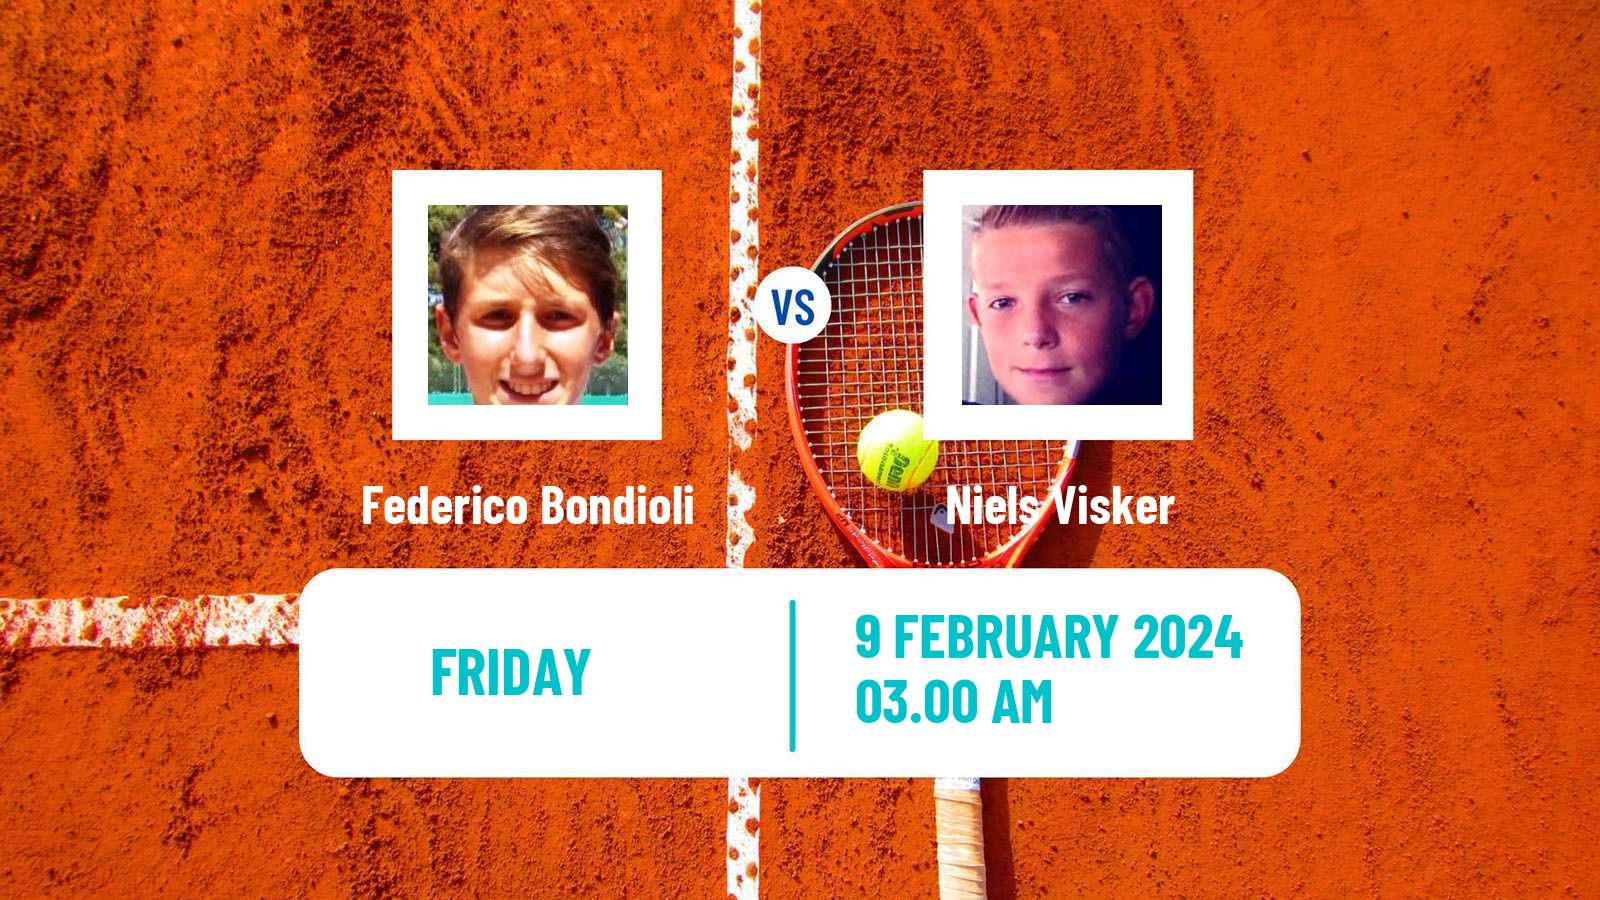 Tennis ITF M15 Sharm Elsheikh 2 Men Federico Bondioli - Niels Visker